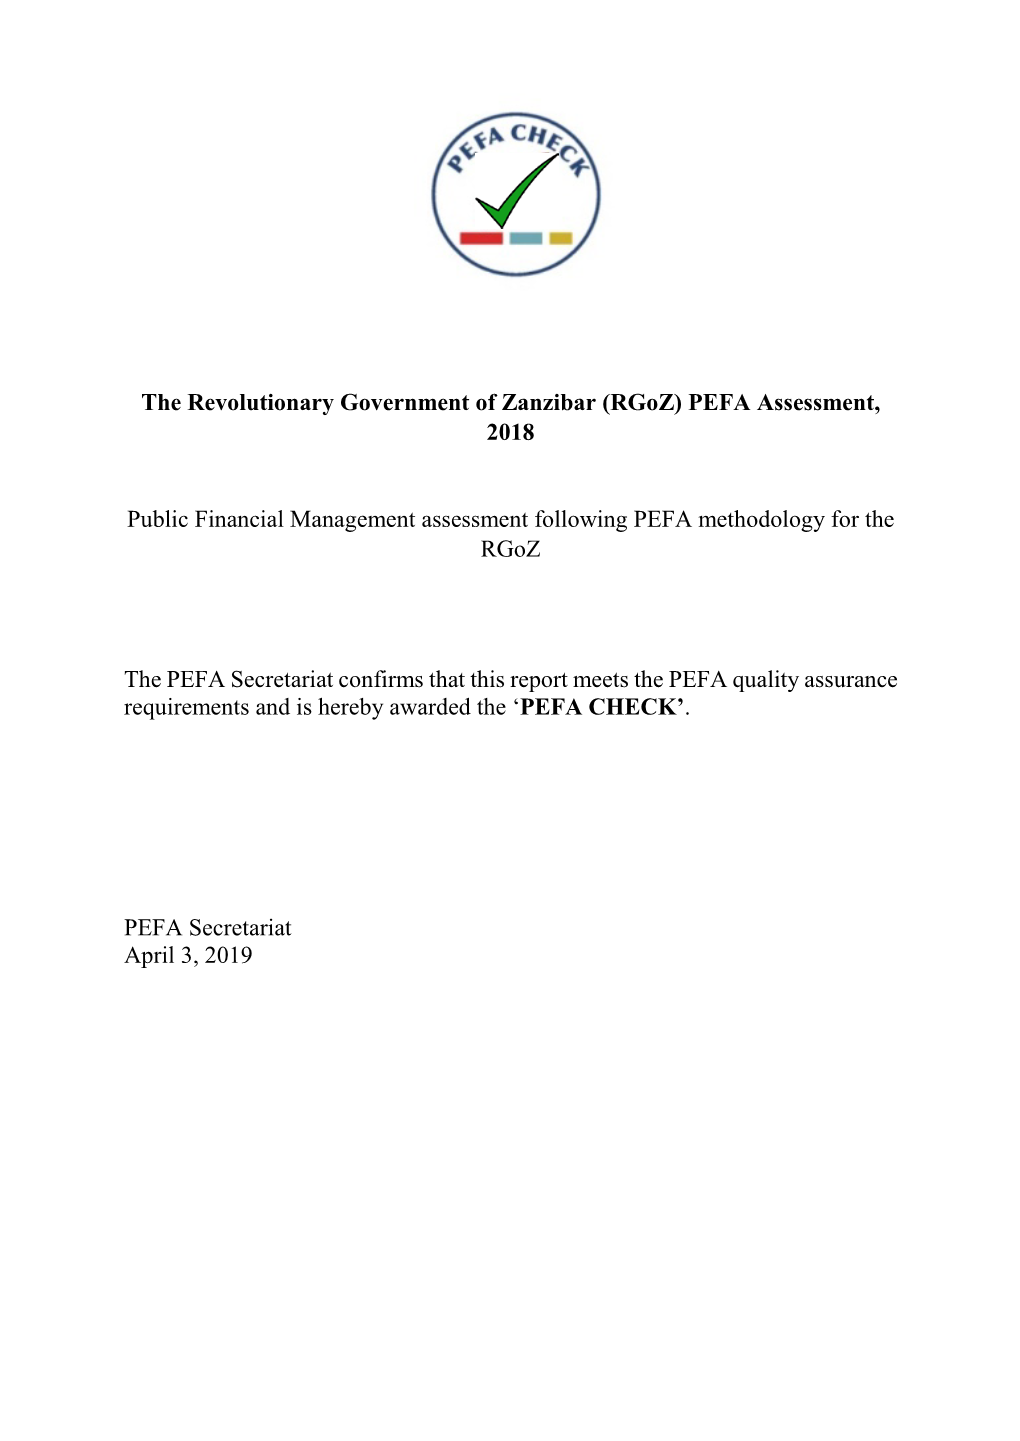 The Revolutionary Government of Zanzibar (Rgoz) PEFA Assessment, 2018